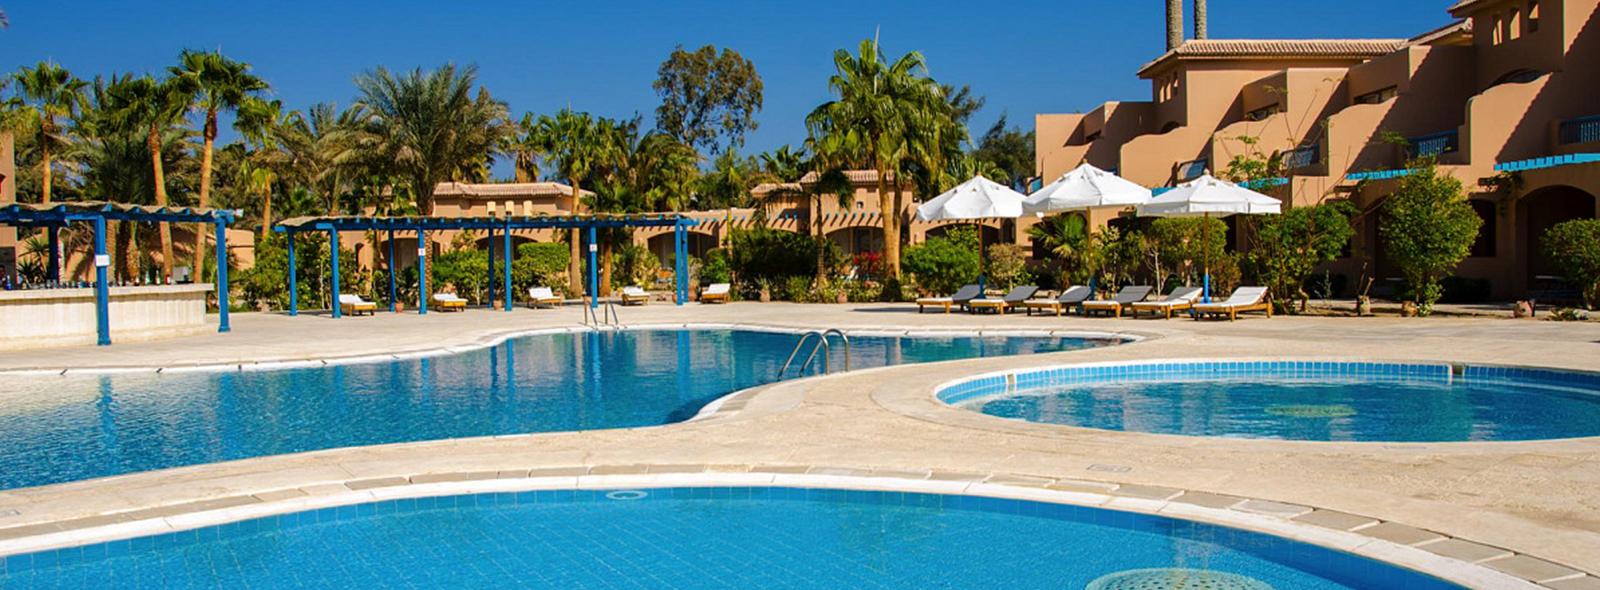 Bienvenue a hotel Club Paradisio sur le spot de kitesurf a El Gouna en Egypte